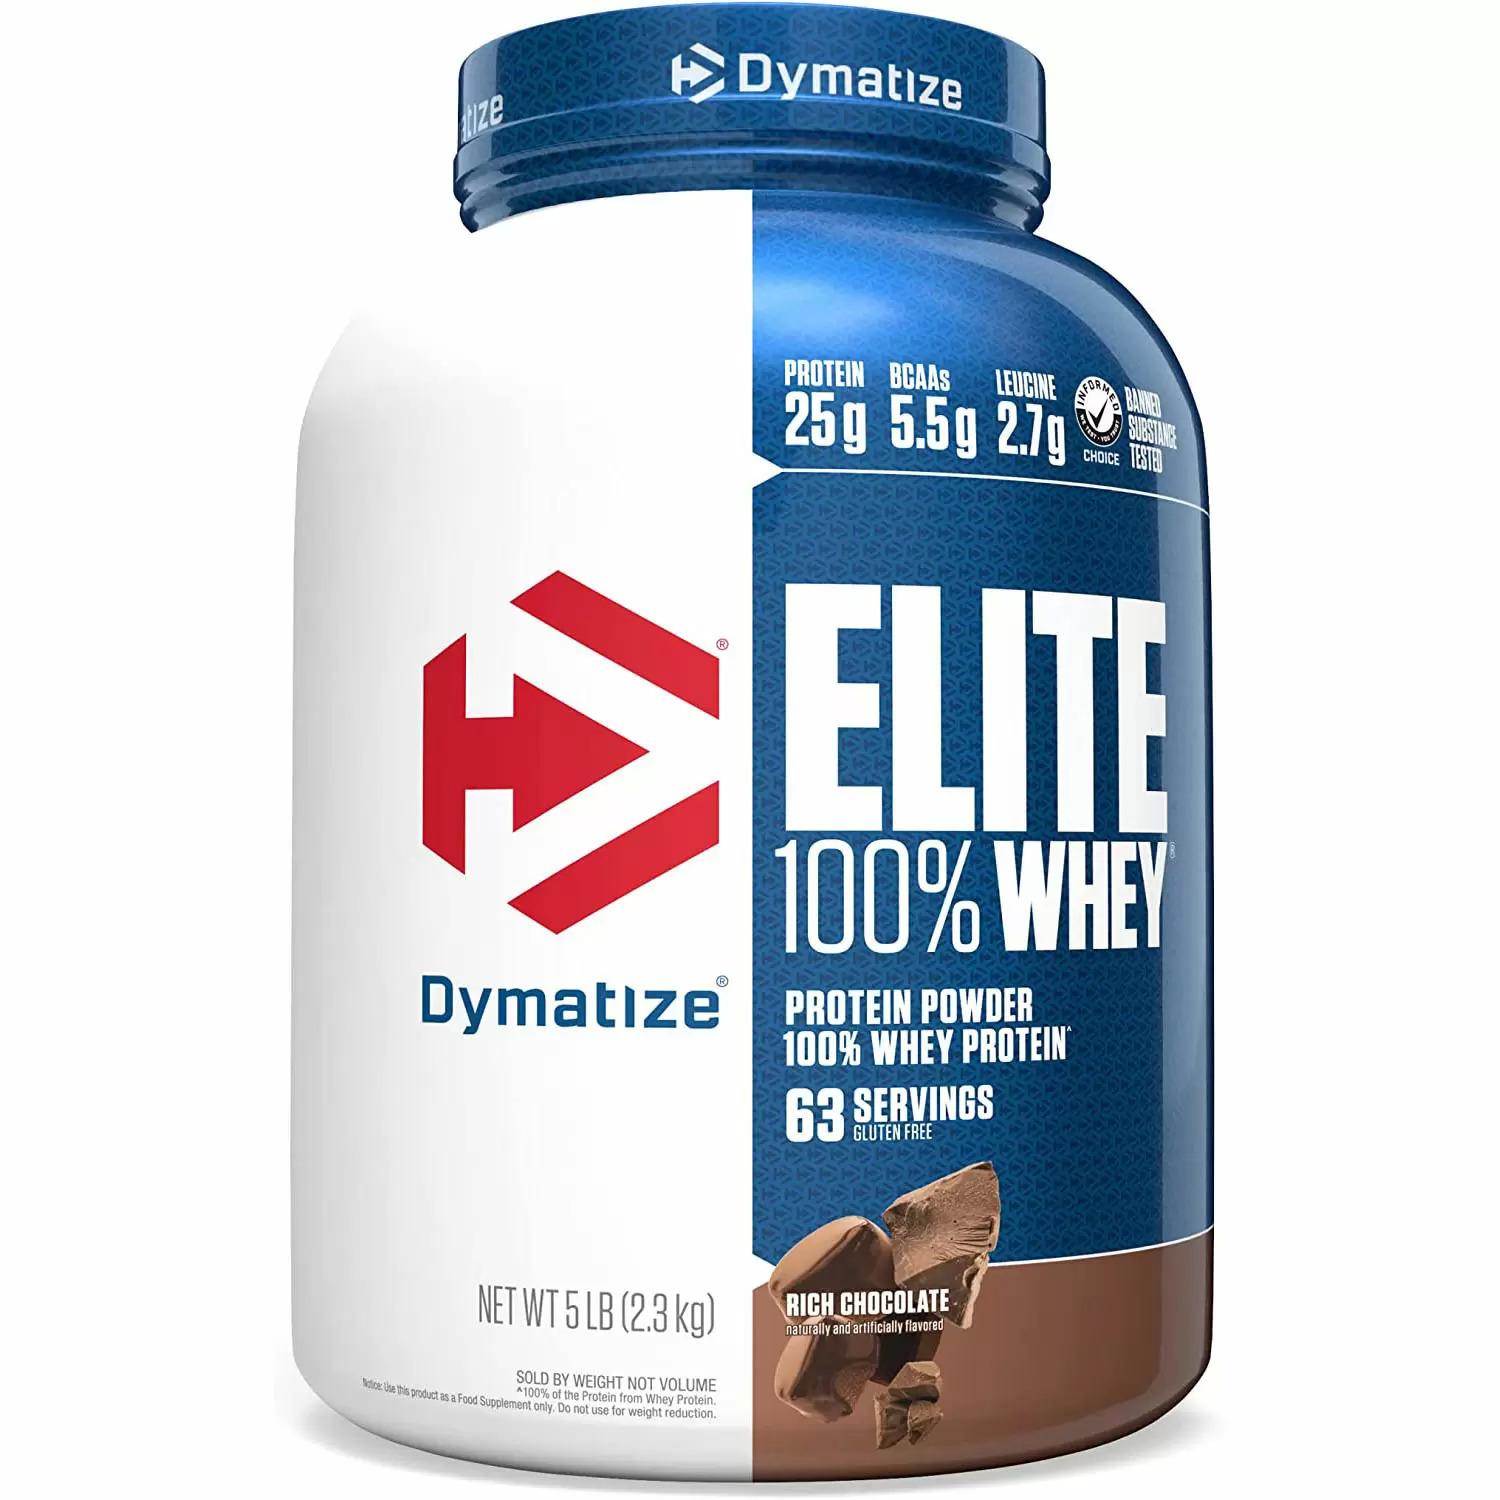 Dymatize Elite Whey Protein Powder for $41.95 Shipped